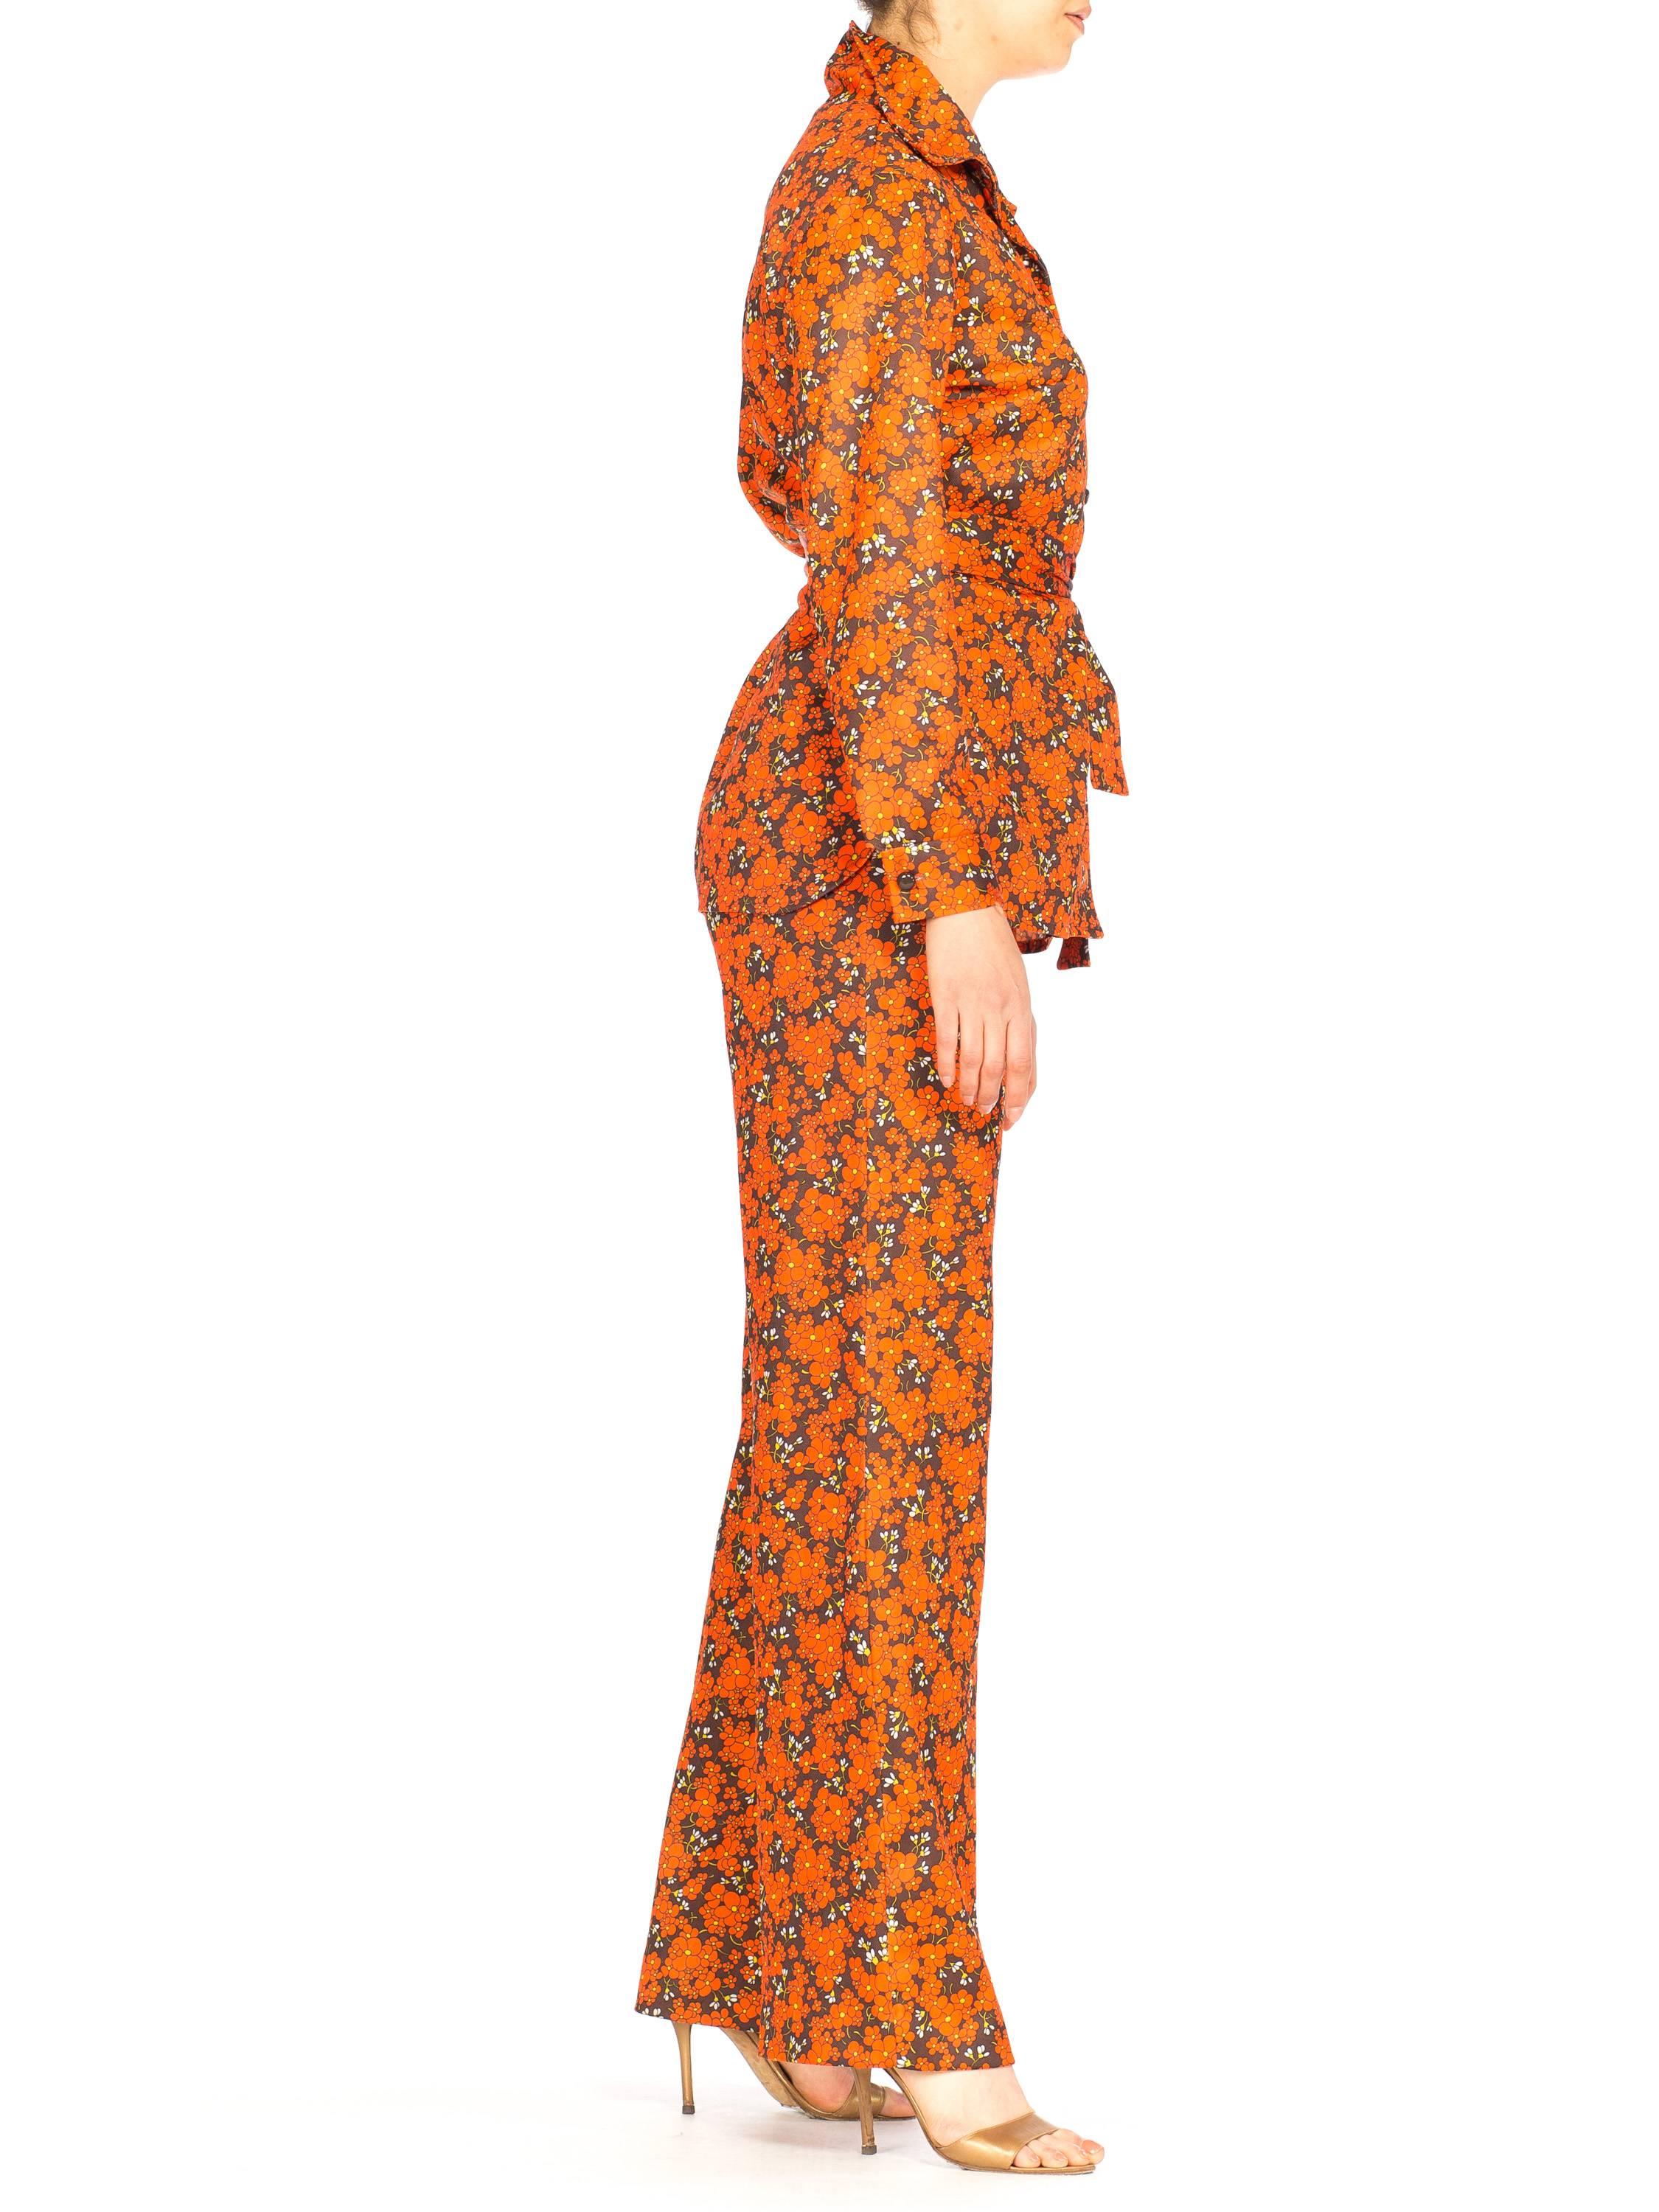 Orange and Brown Floral Mod Disco Pantsuit Set, 1970s 3